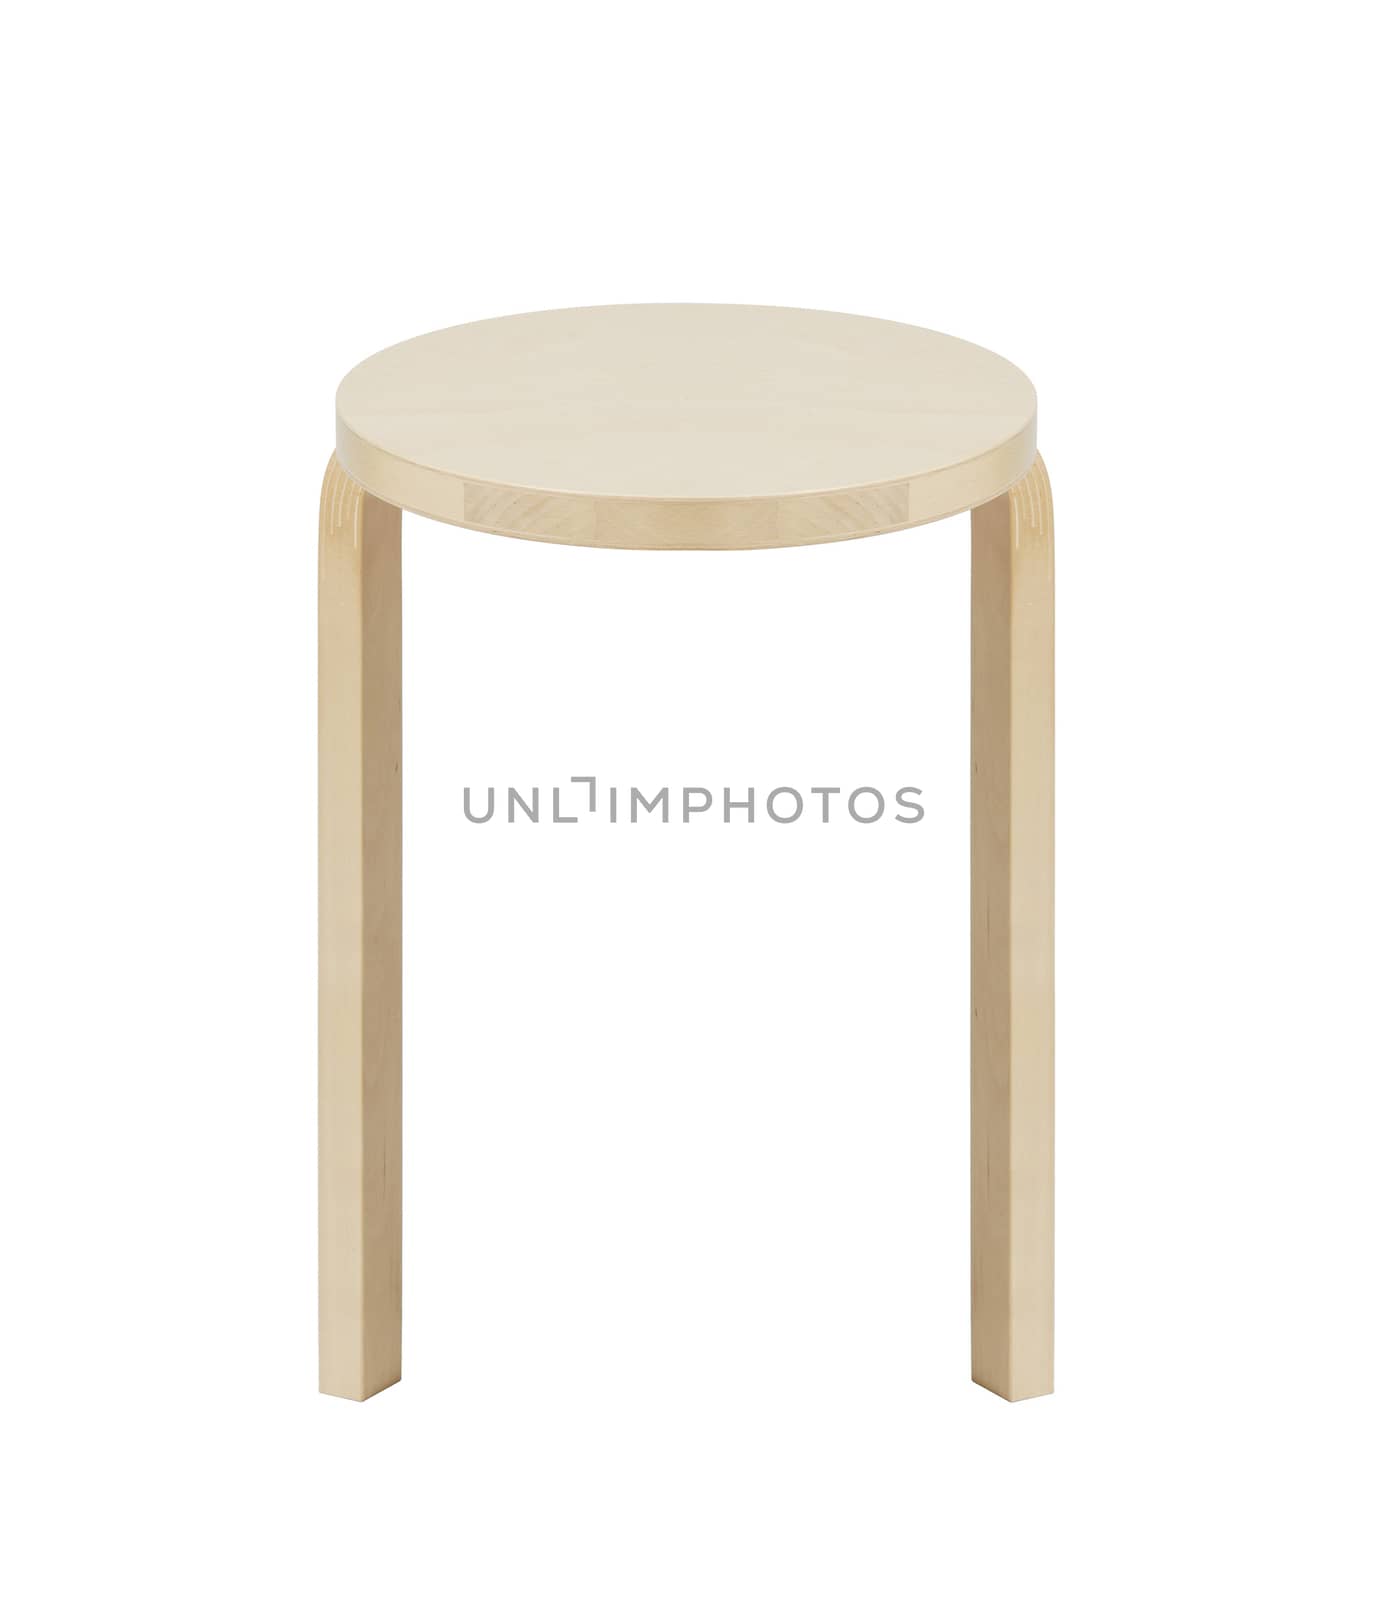 lassic round wooden kitchen stool